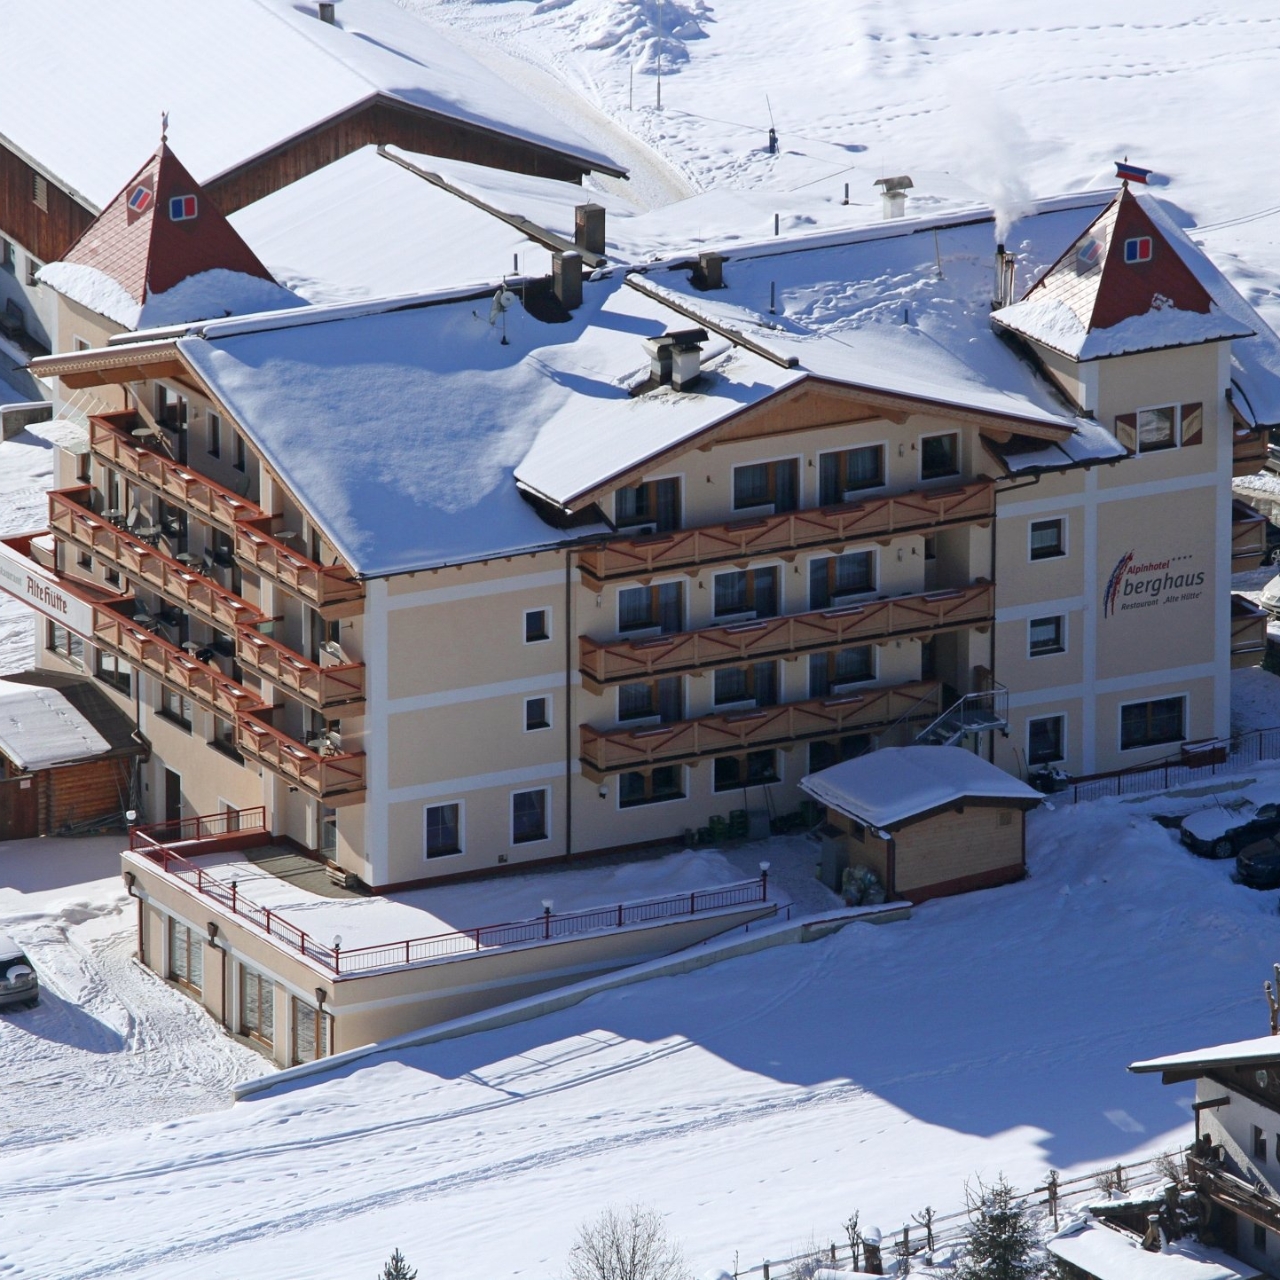 Alpinhotel Berghaus - 4 HRS star hotel in Tux (Tyrol)